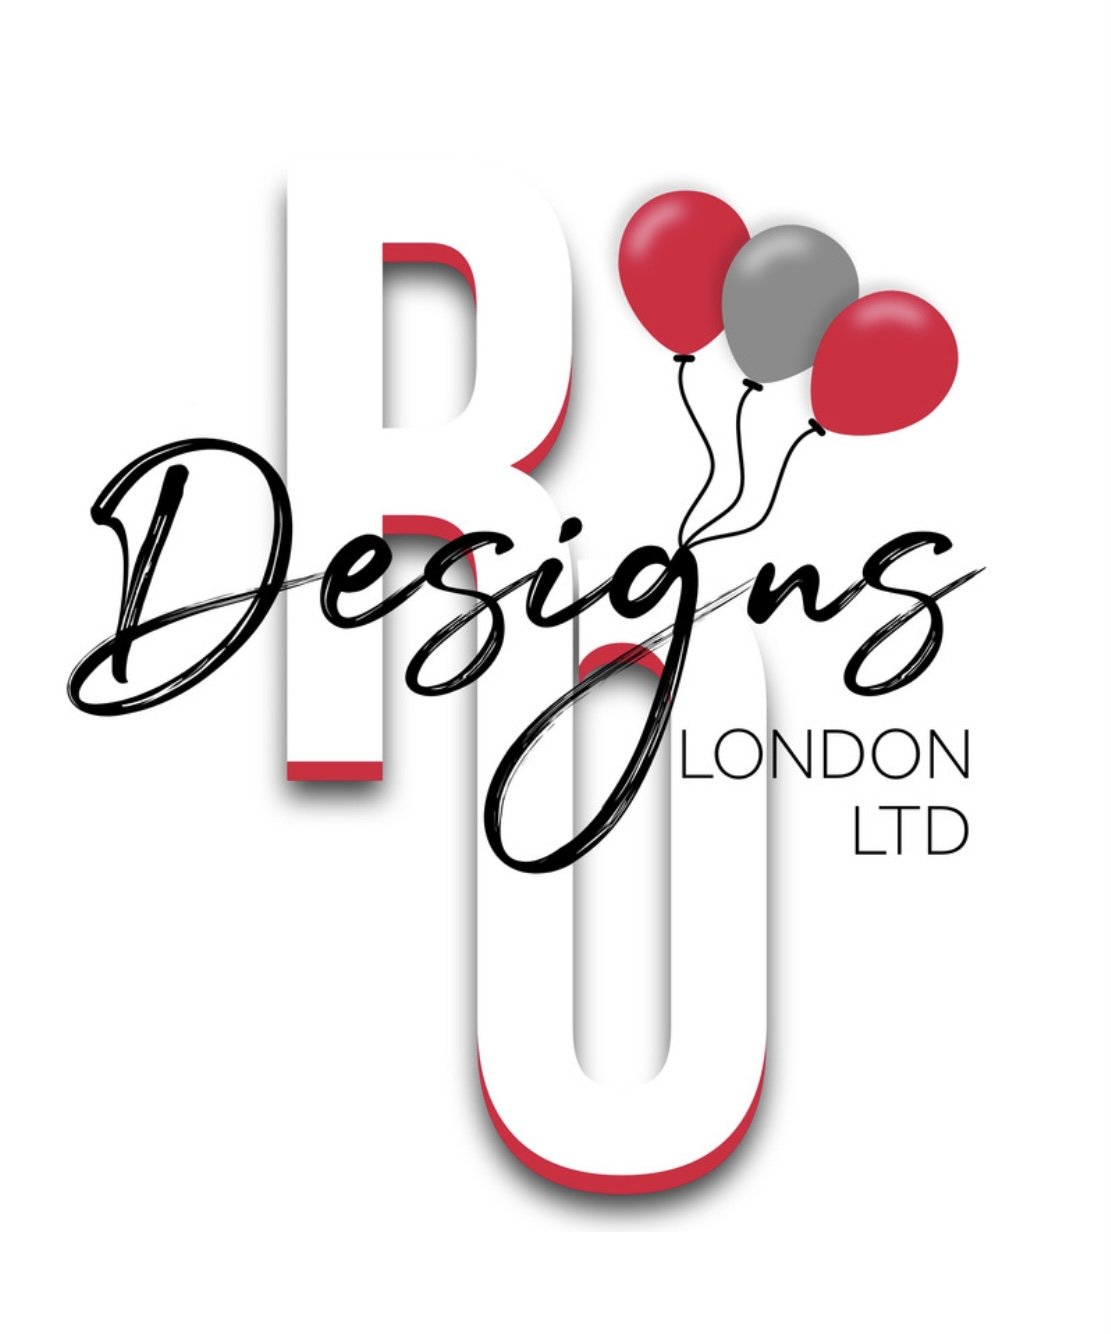 Ro Designs London Ltd